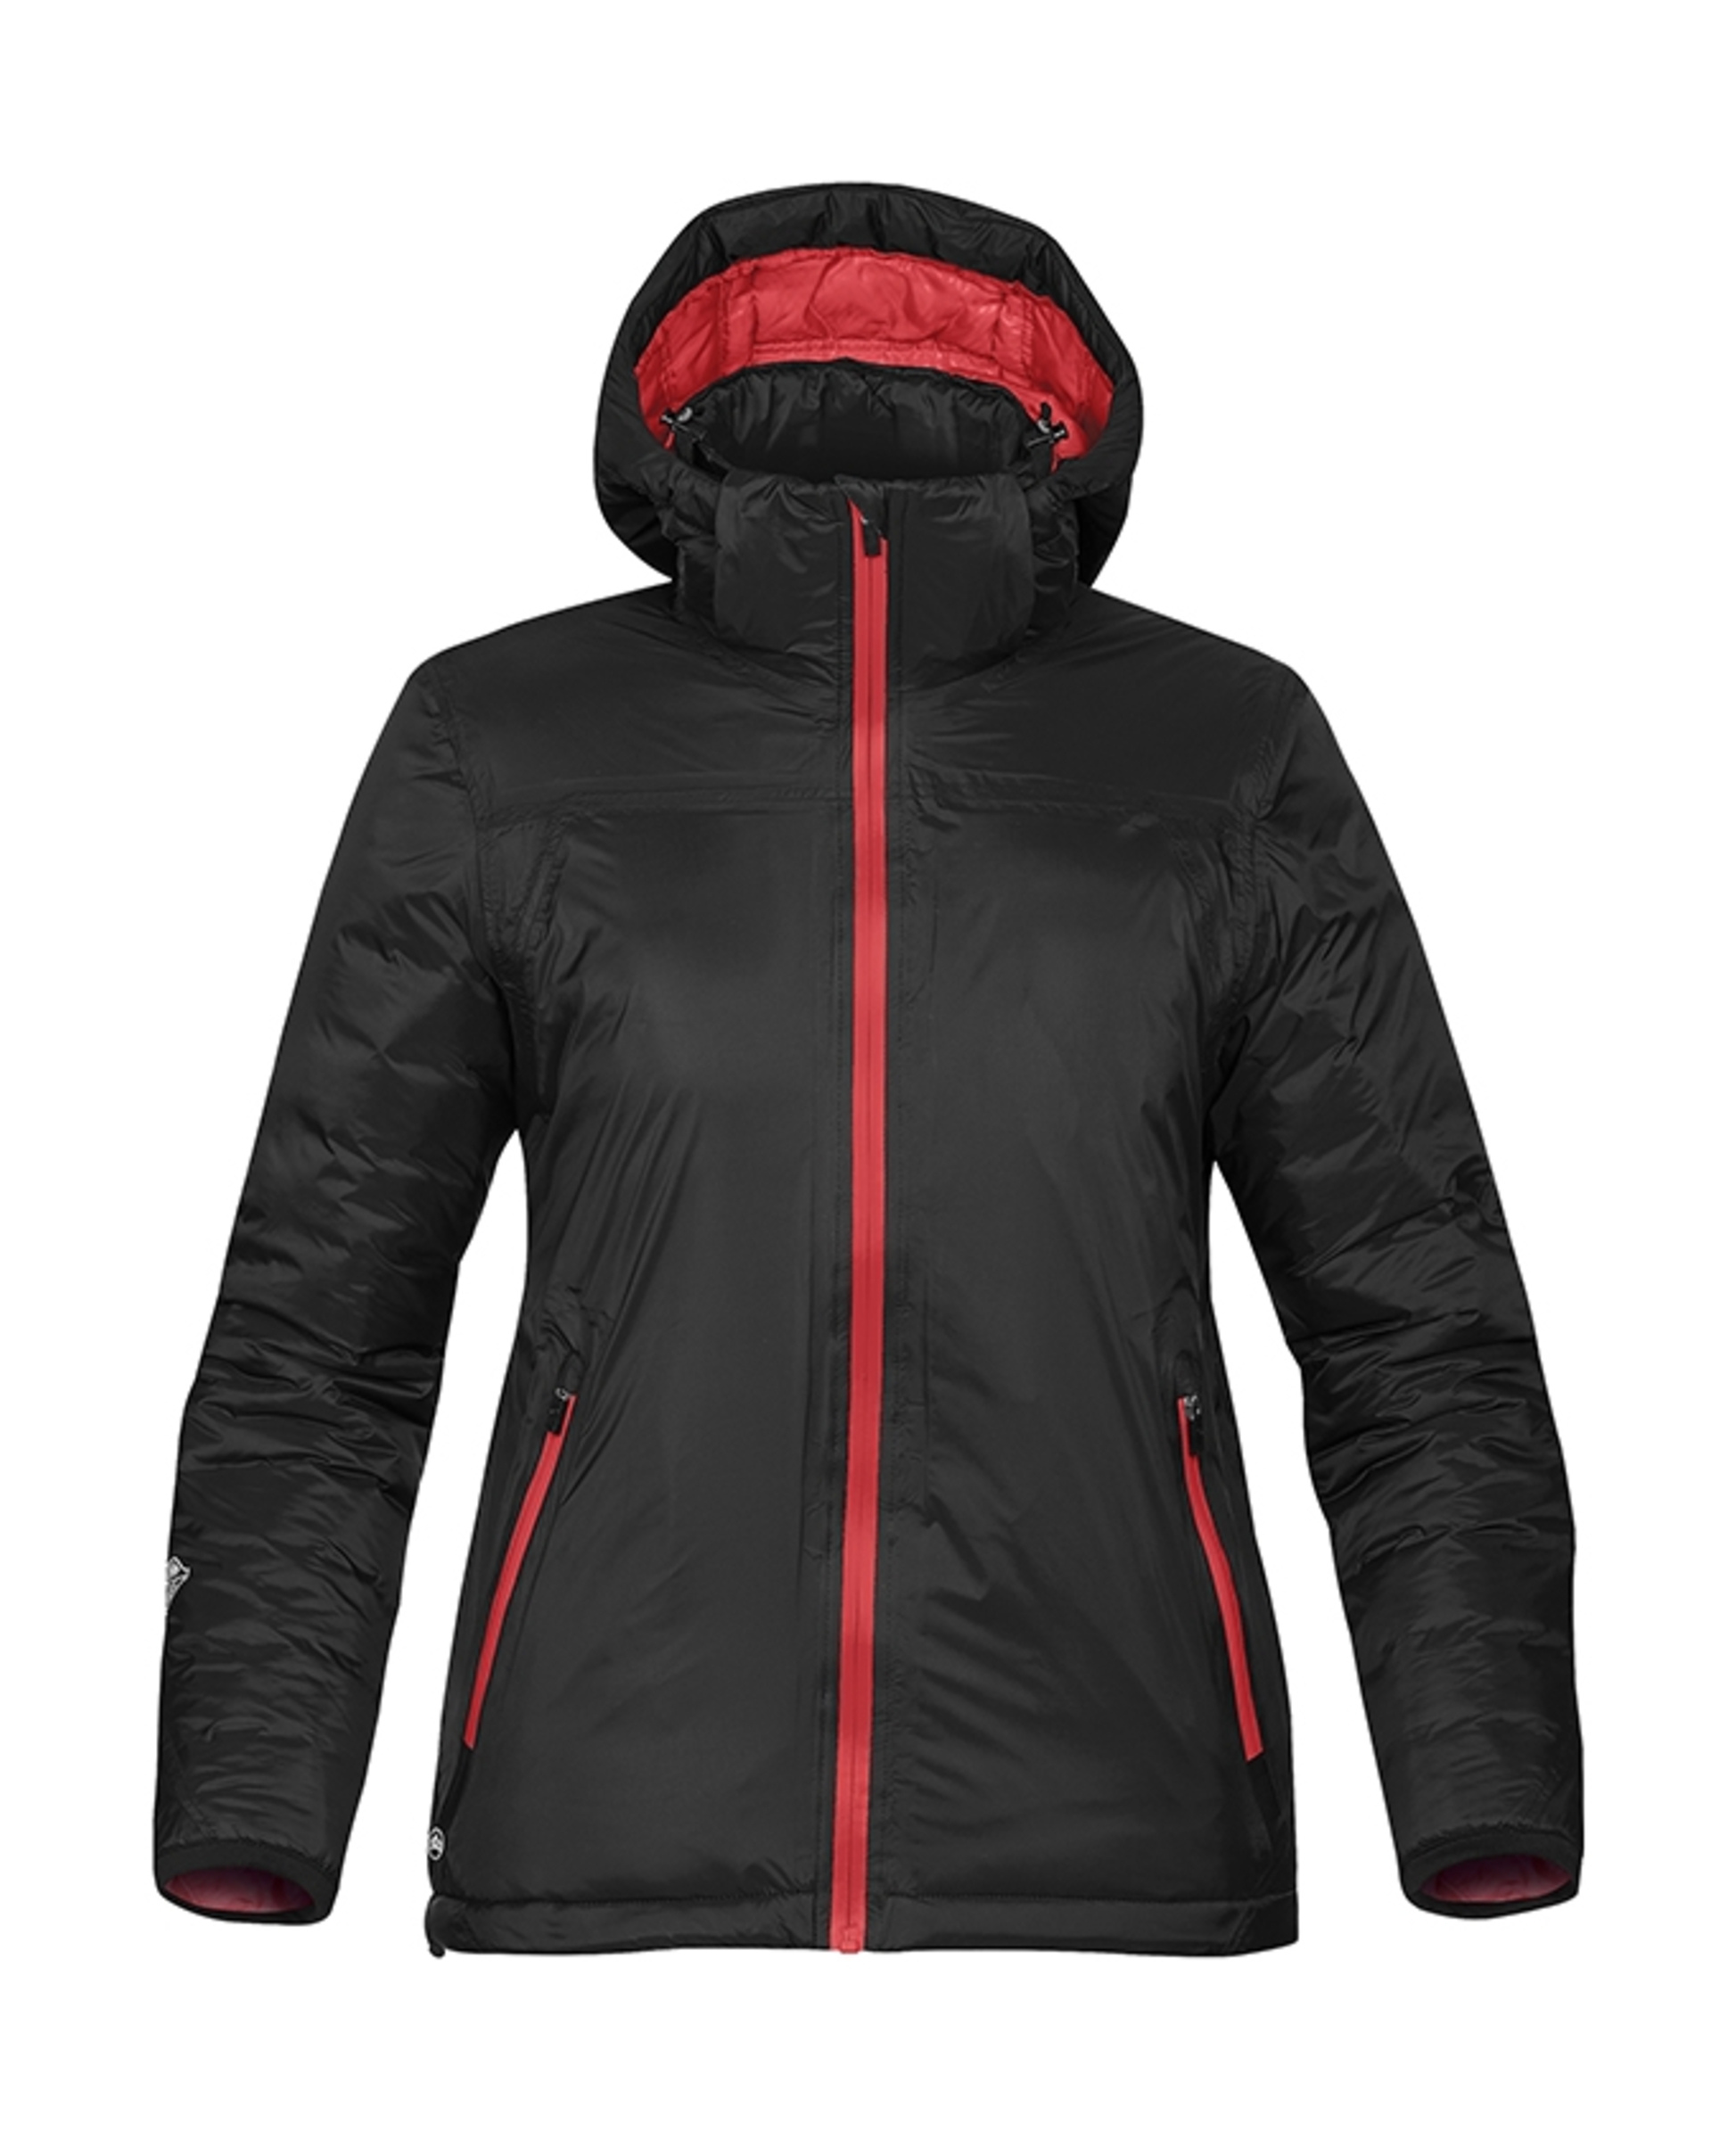 Stormtech Women's Black Ice Thermal Jacket